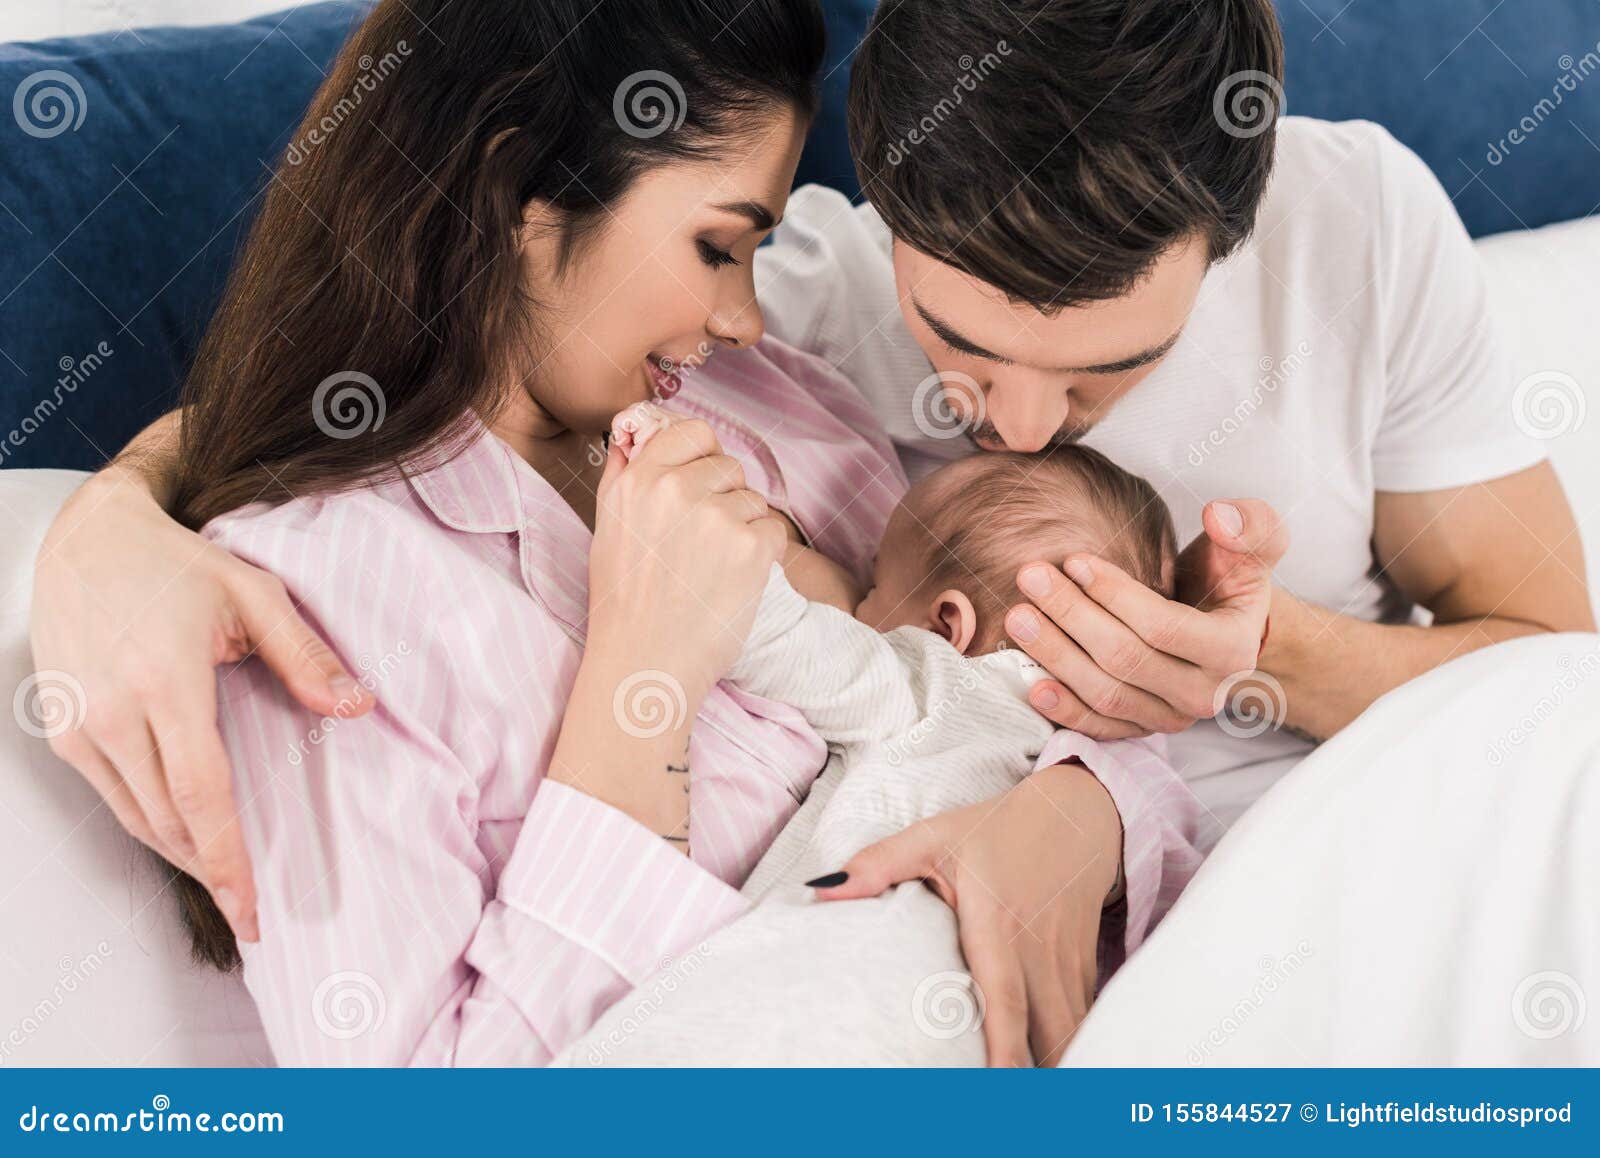 Woman Breastfeeding Husband Stock Photos